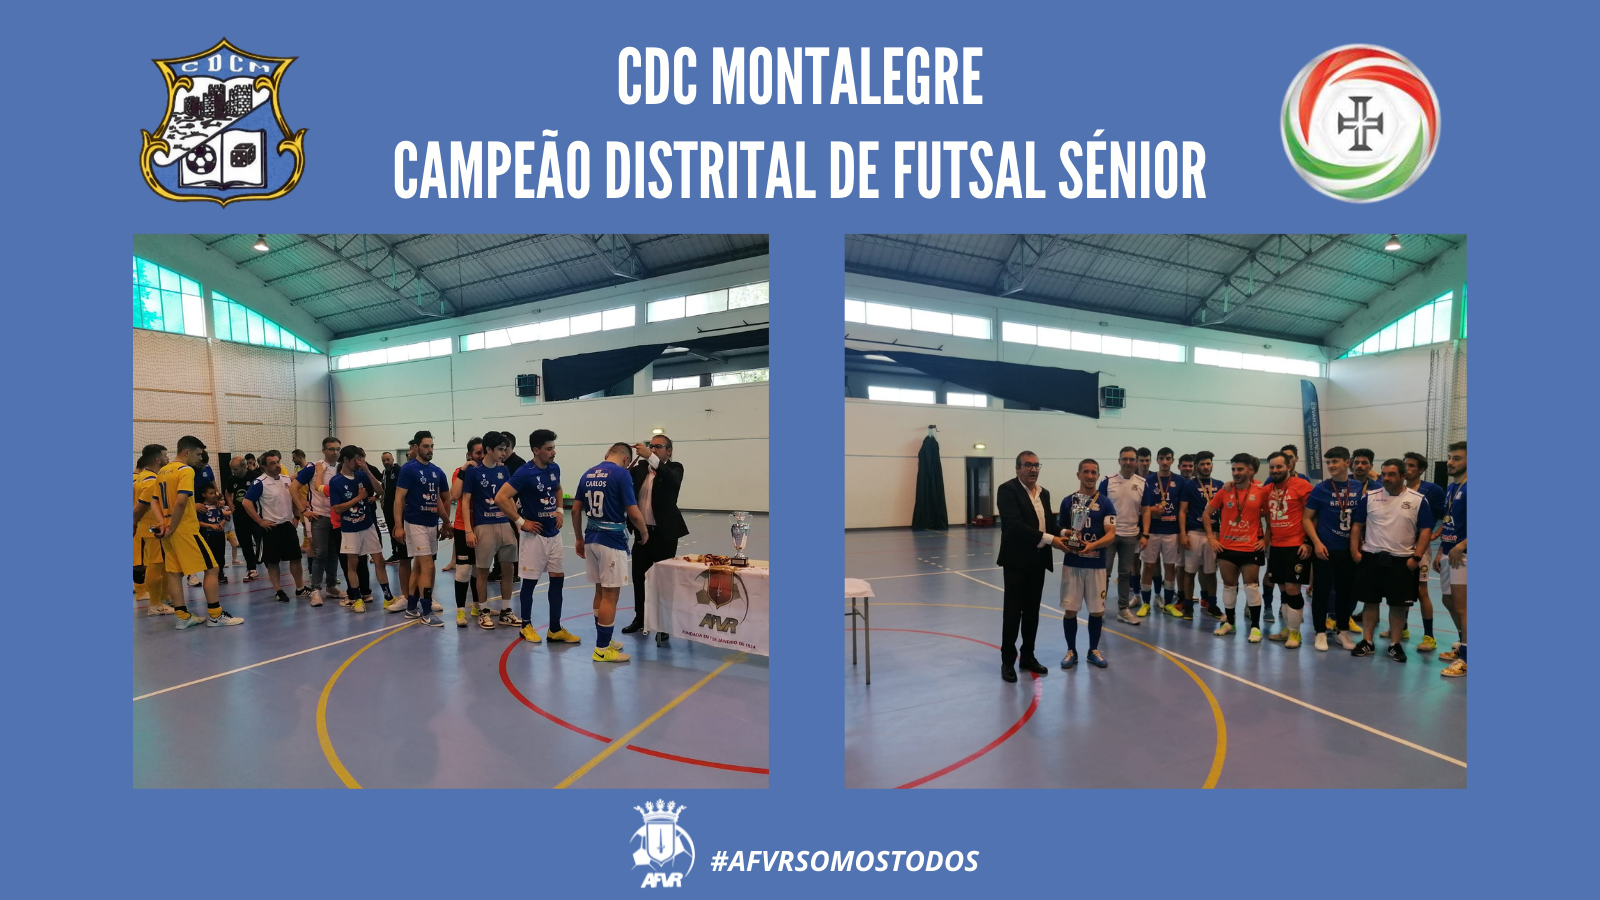 CDC Montalegre | Campeão Distrital de Futsal Sénior